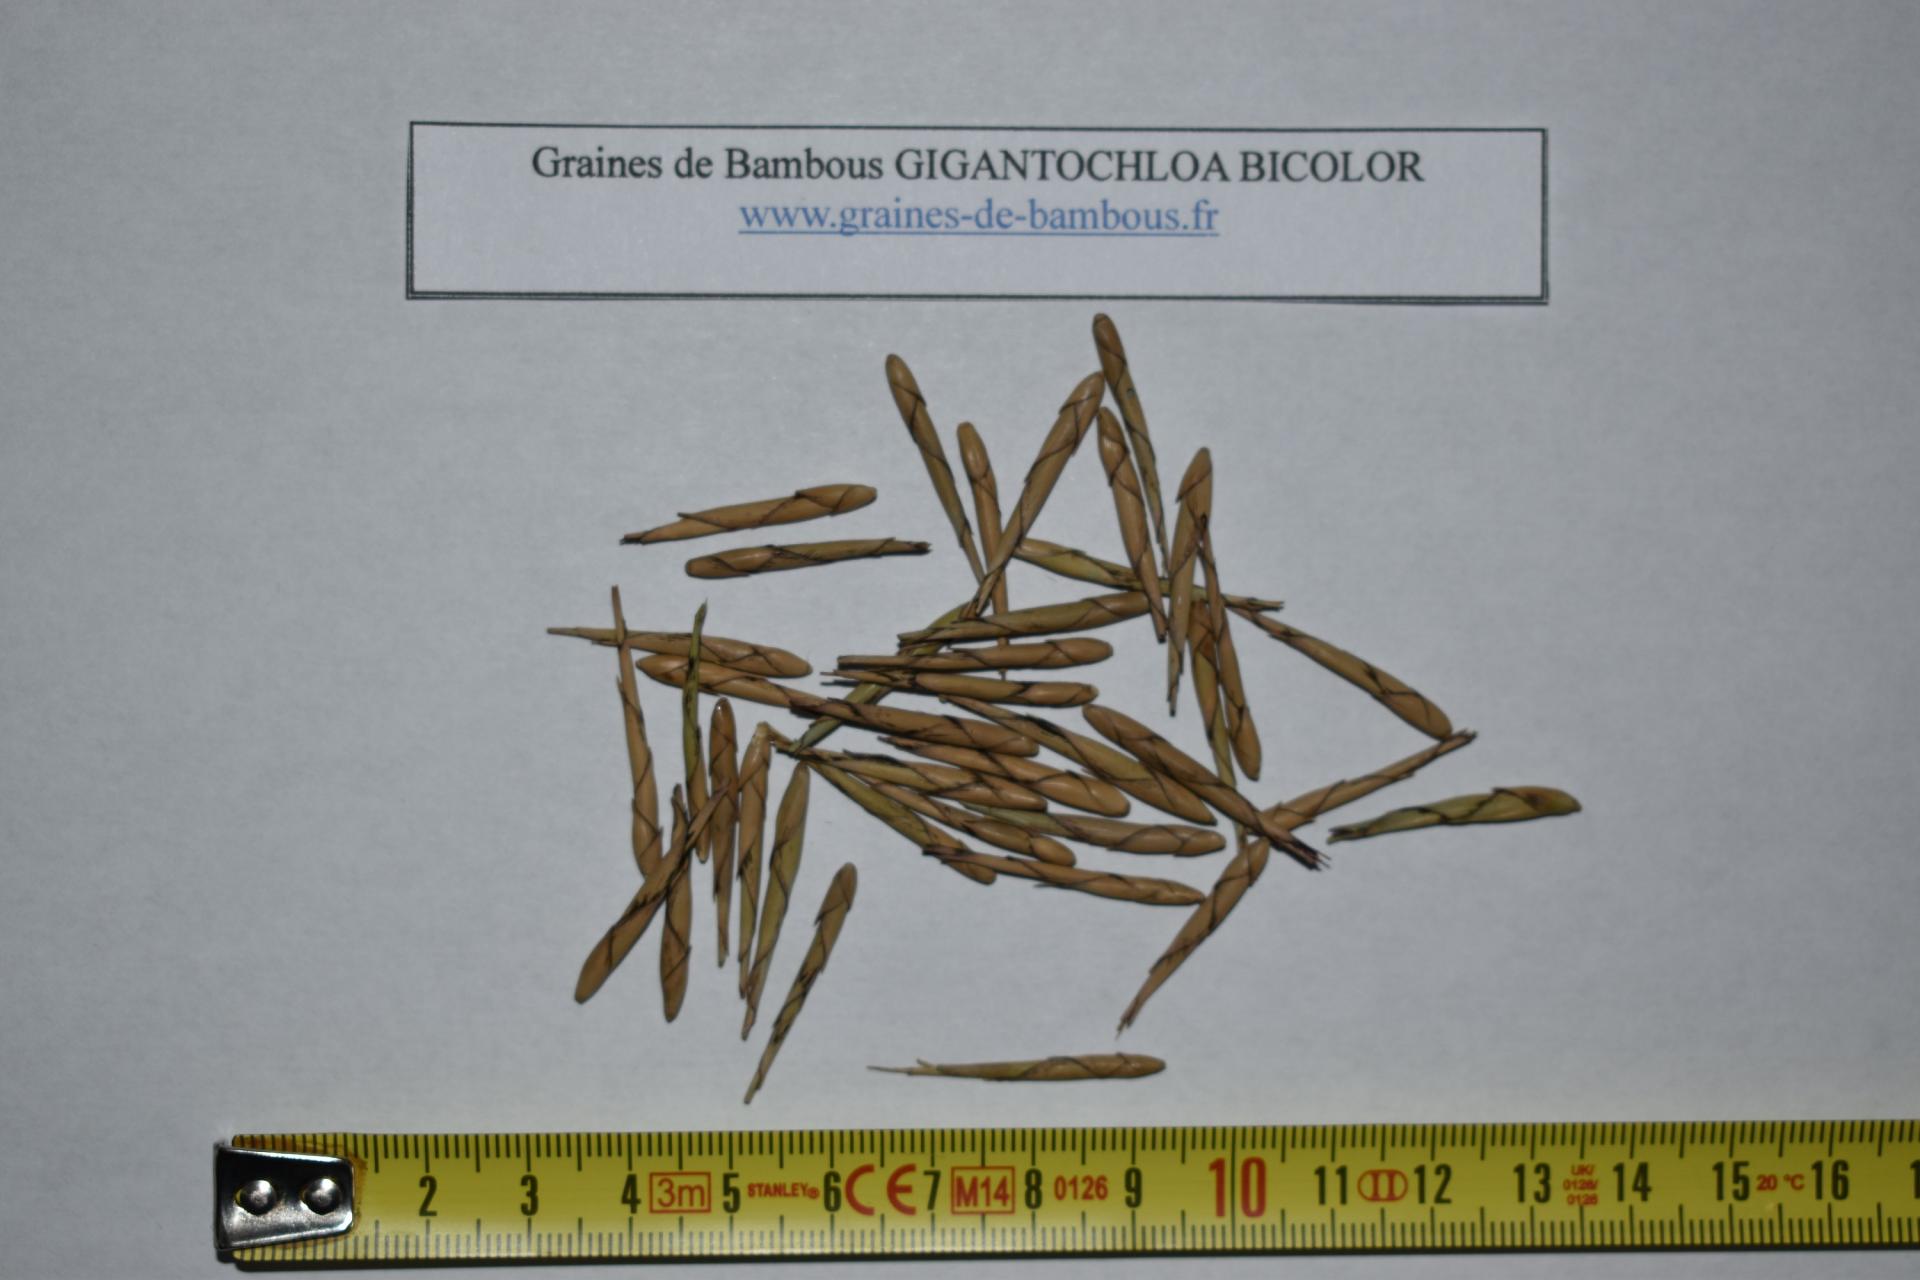 Seeds gigantochloa bicolor graines de bambous fr